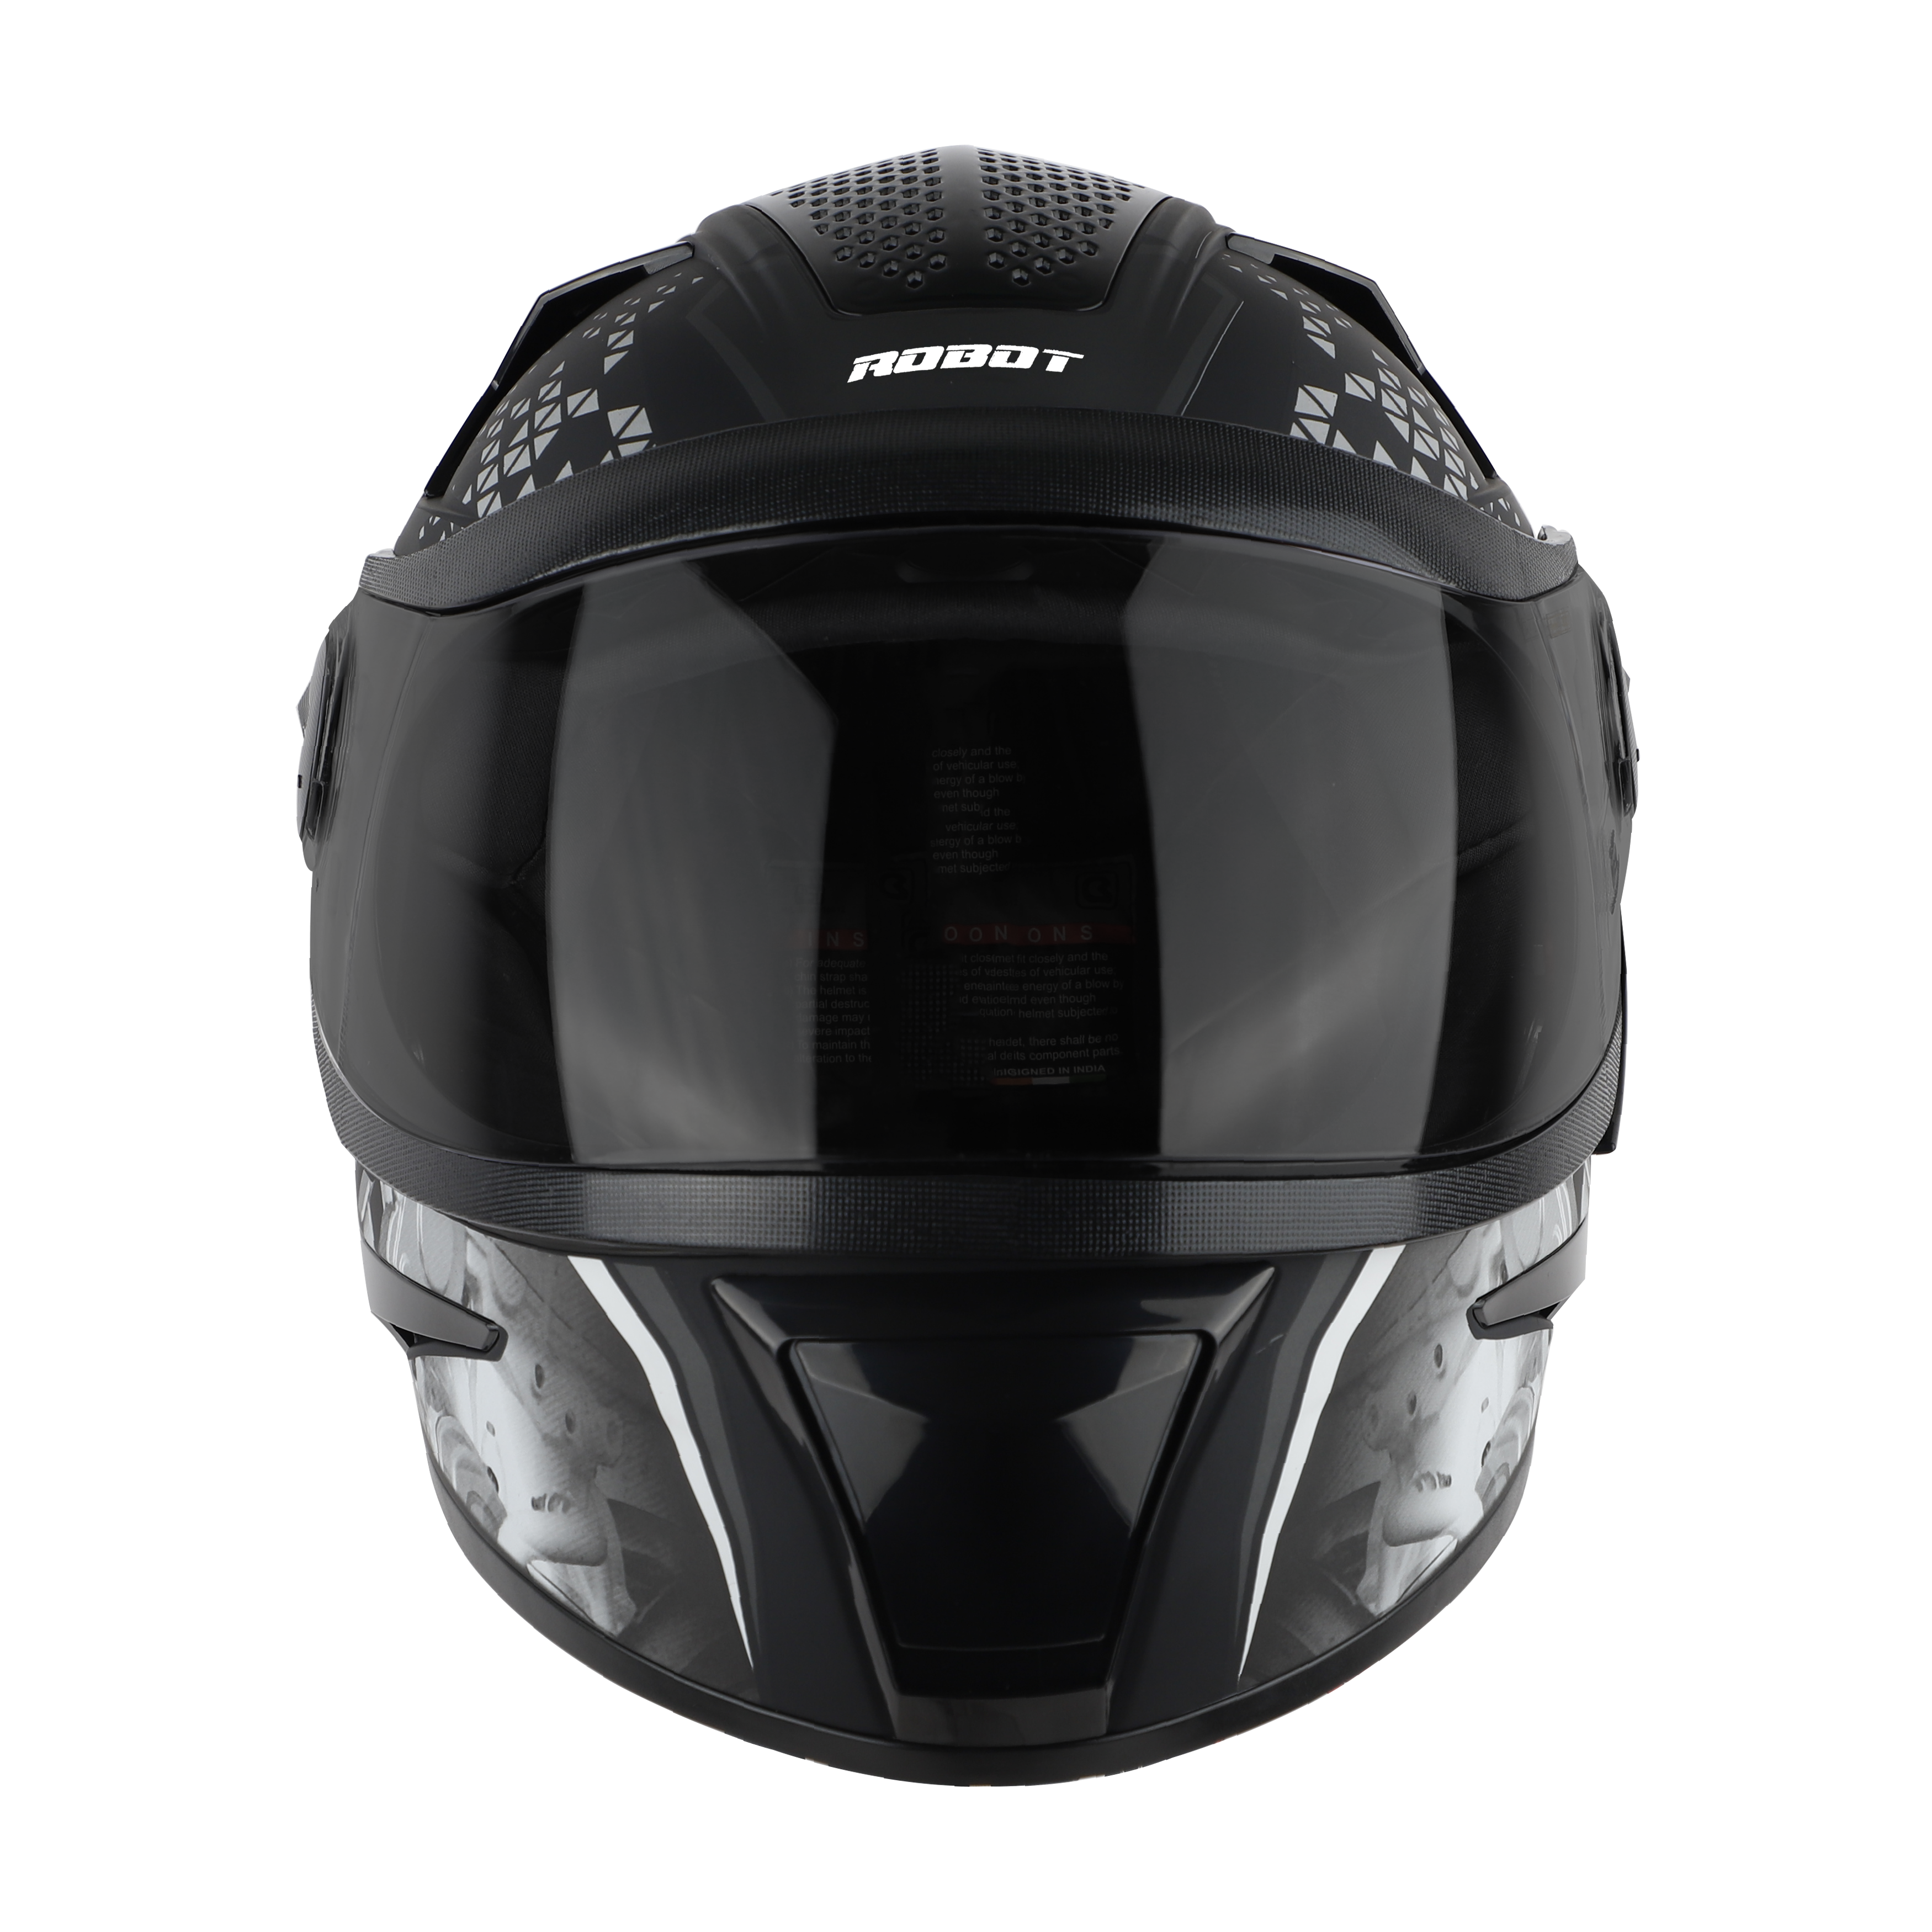 Steelbird SBH-17 Ignimeter Full Face ISI Certified Graphic Helmet (Matt Black Grey With Smoke Visor)